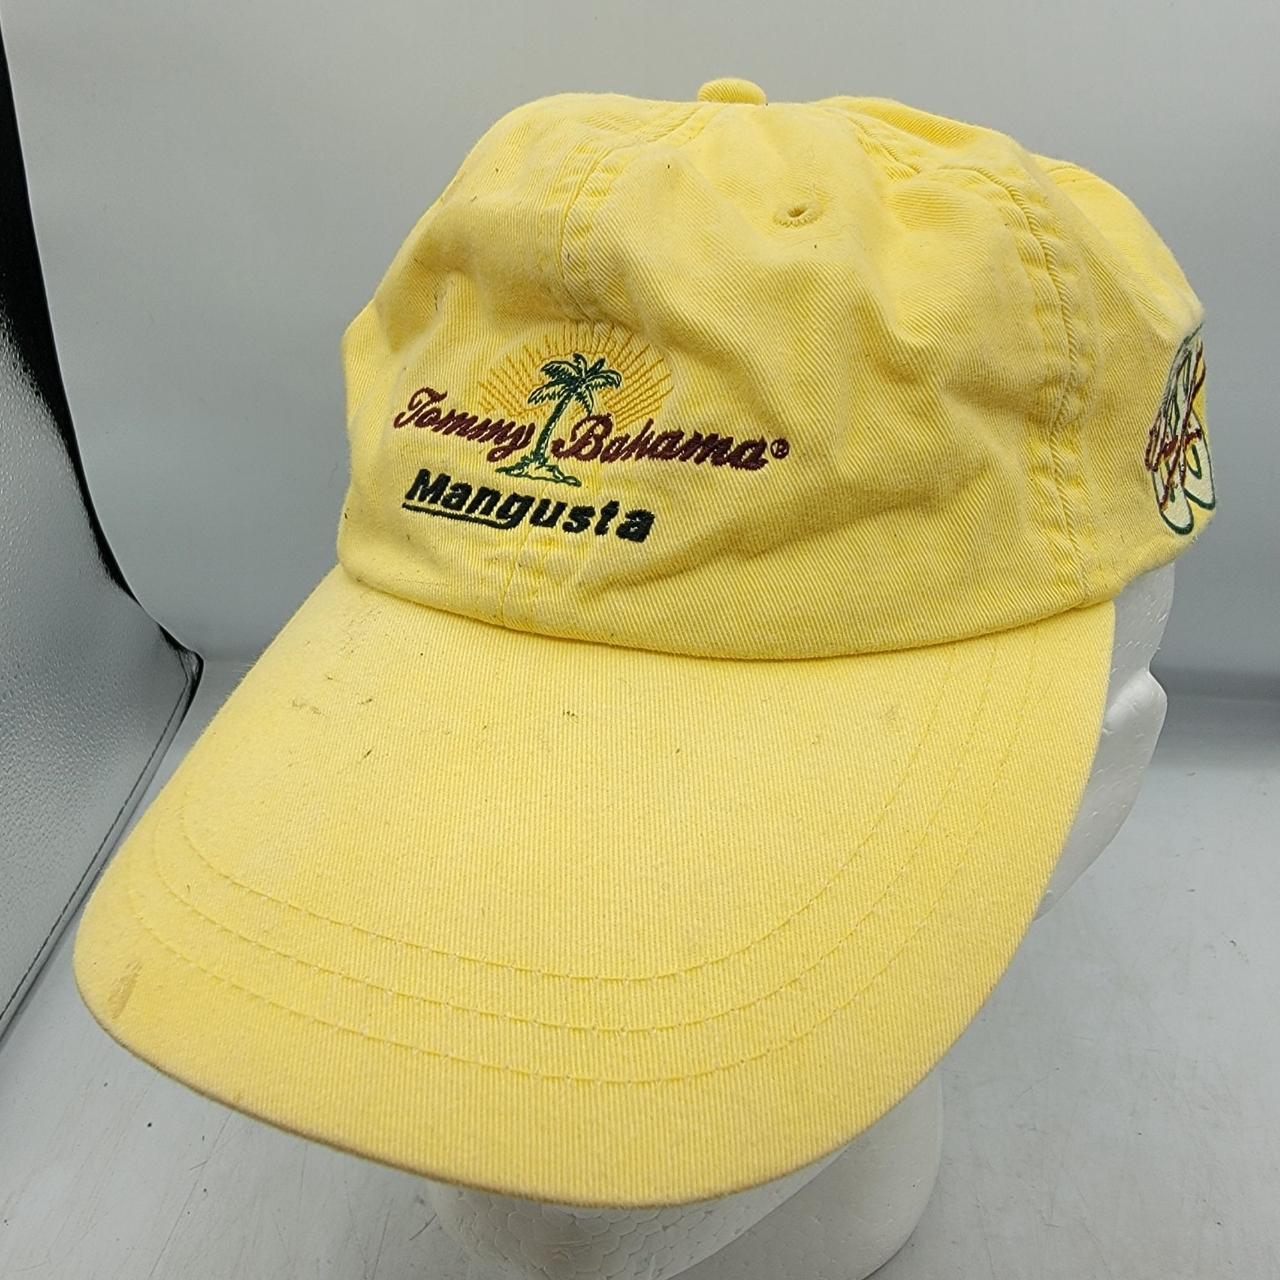 Tommy Bahama Men's Caps - Yellow